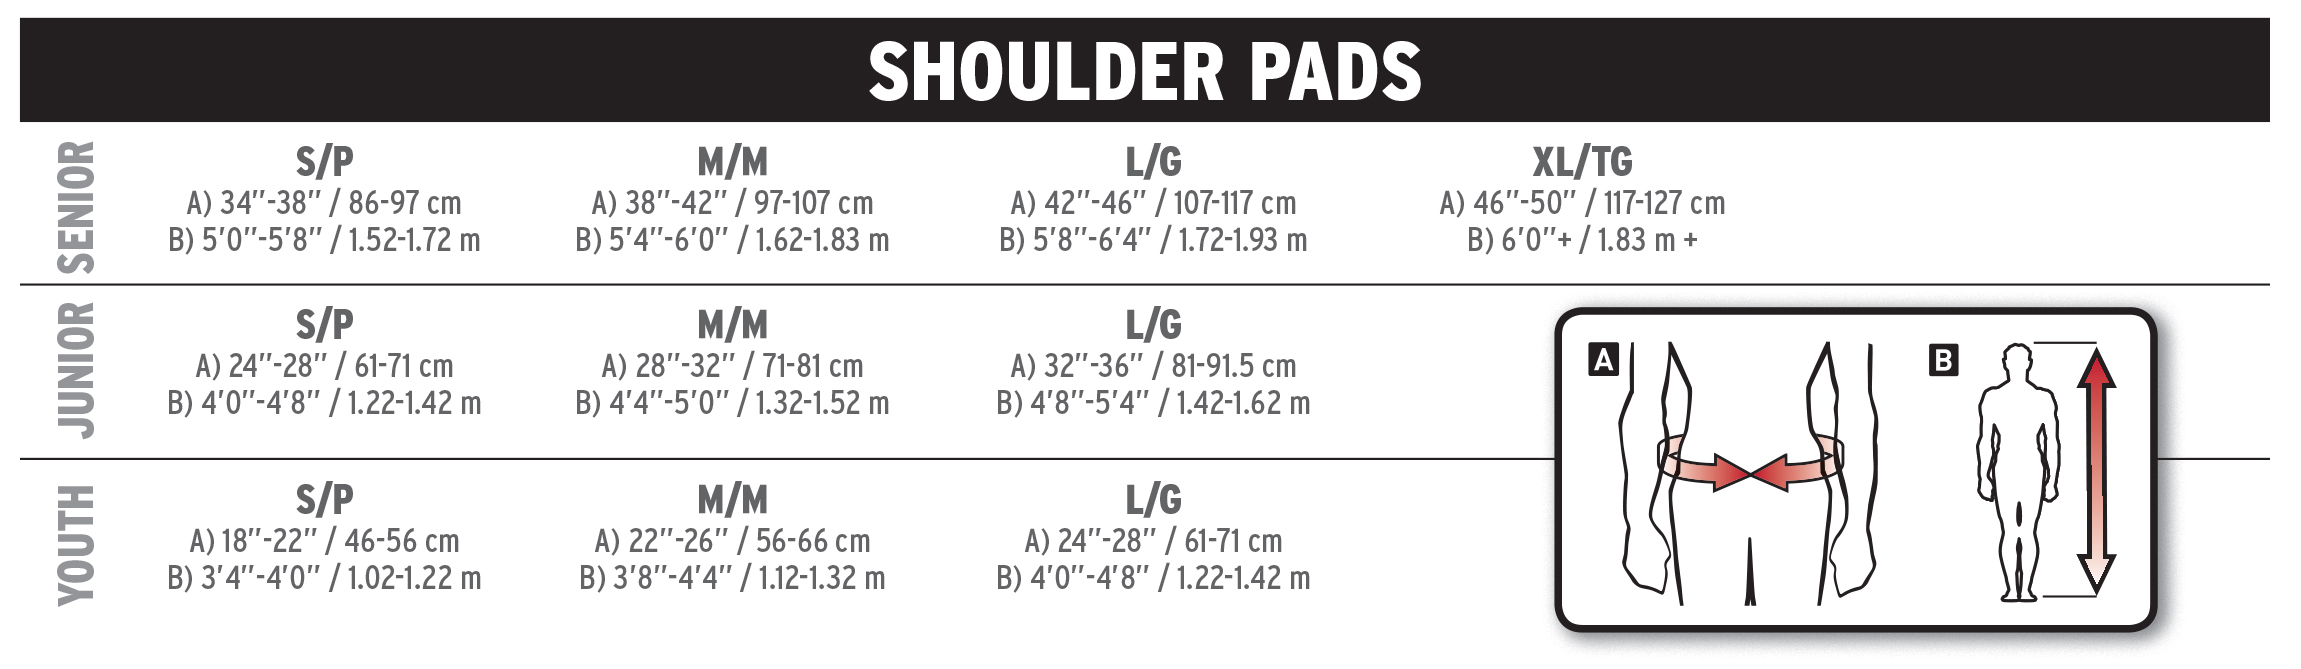 Goalie Pad Size Chart Ccm